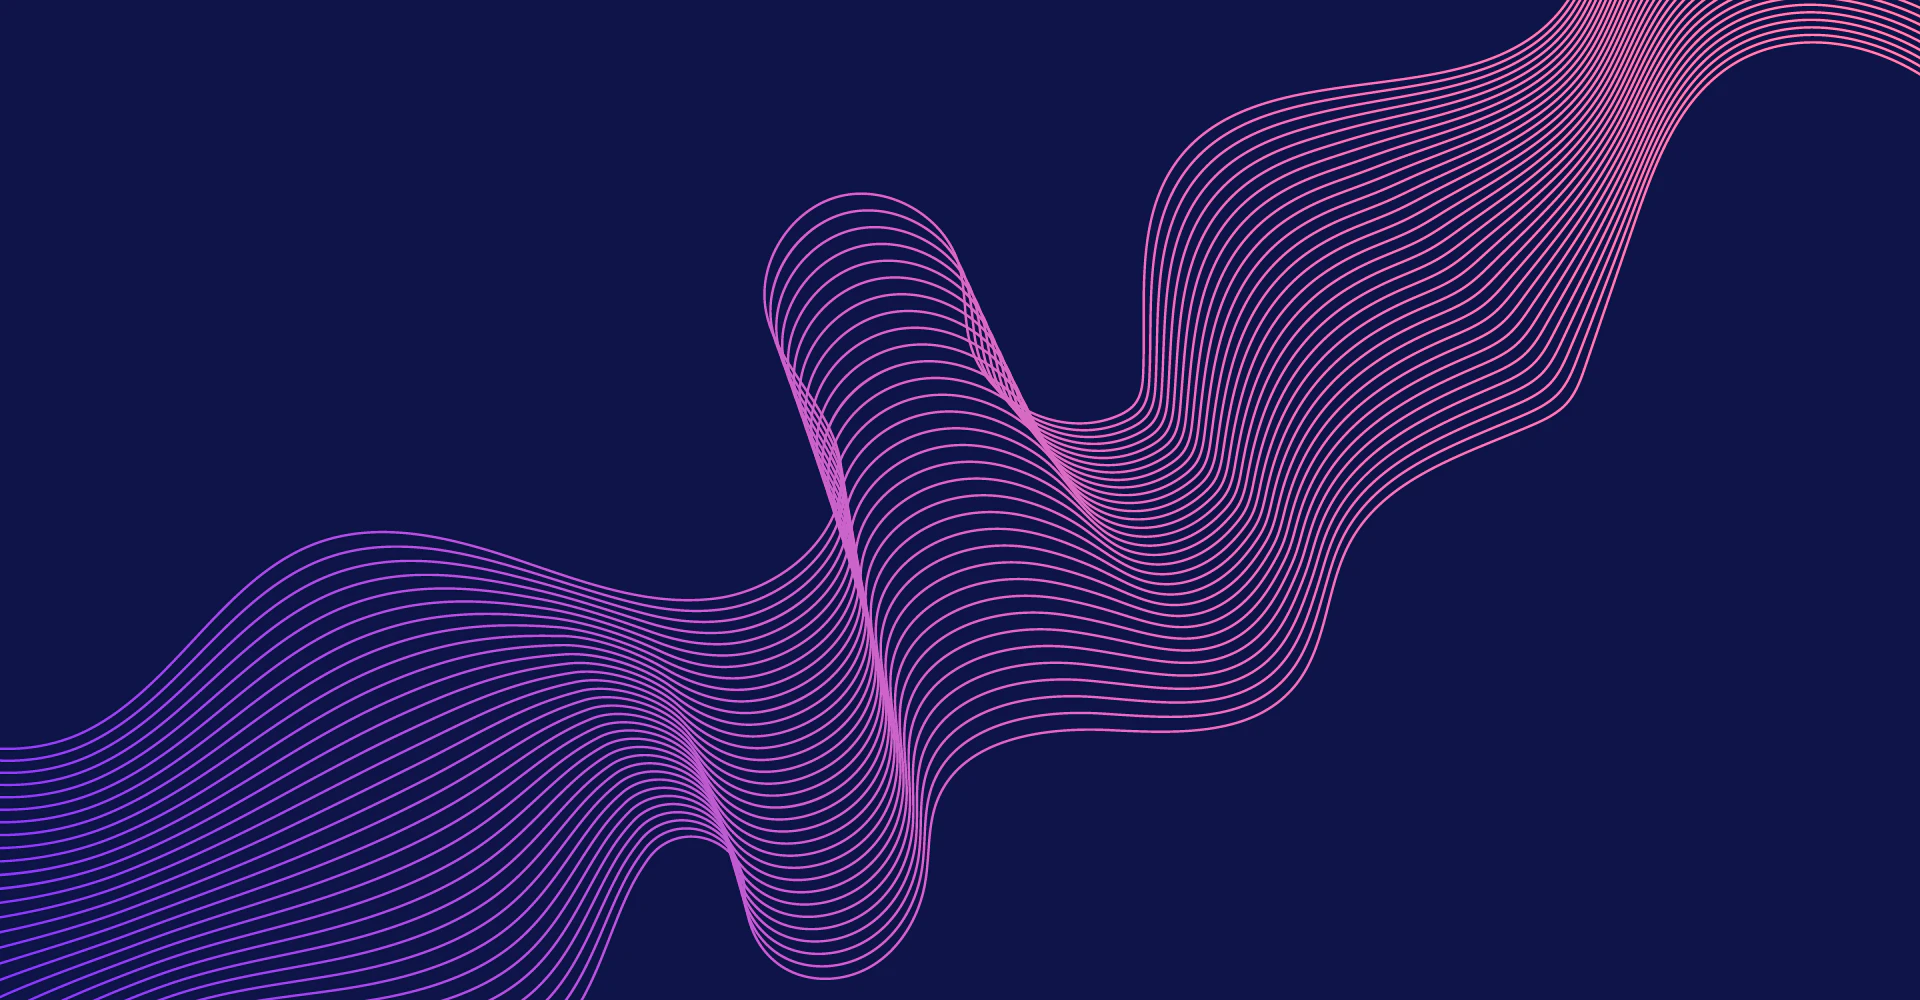 Dark blue background with a purple, spiraling graphic